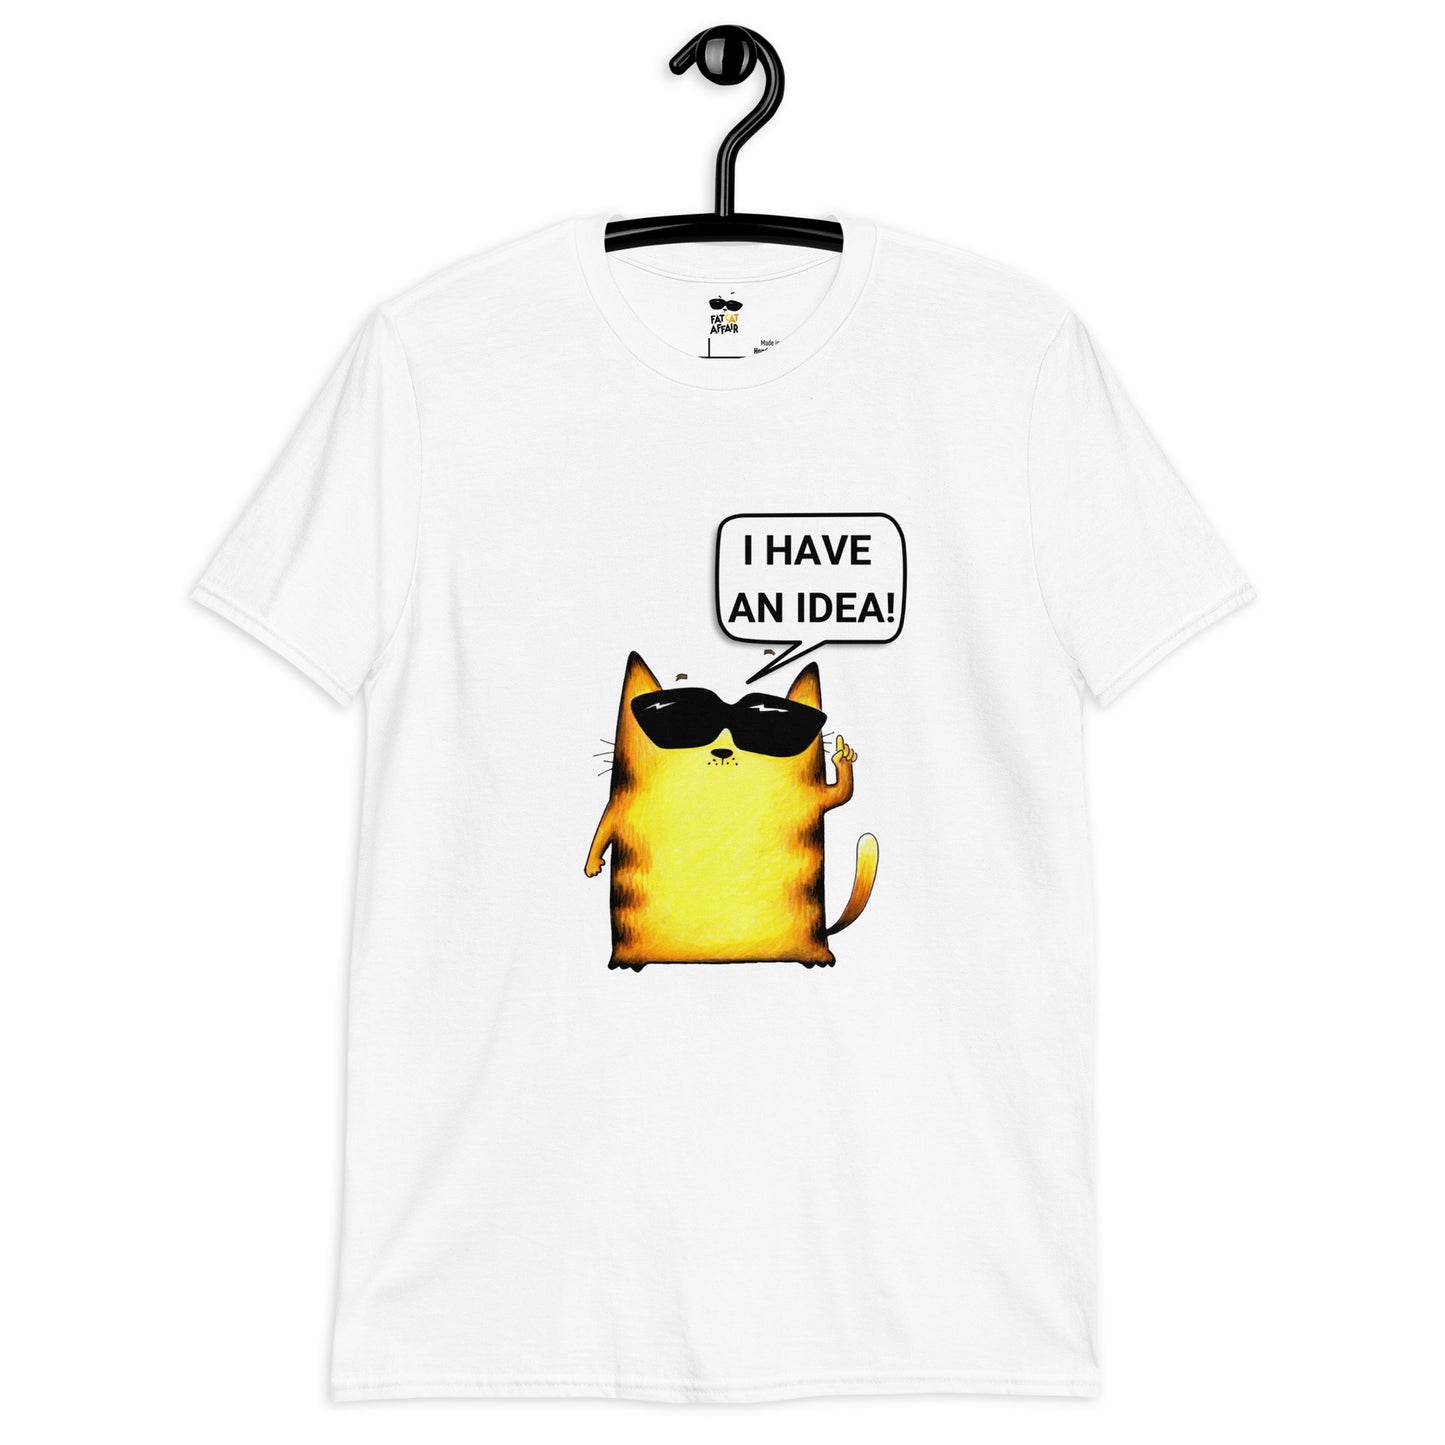 White men's t-shirt with yellow cat design